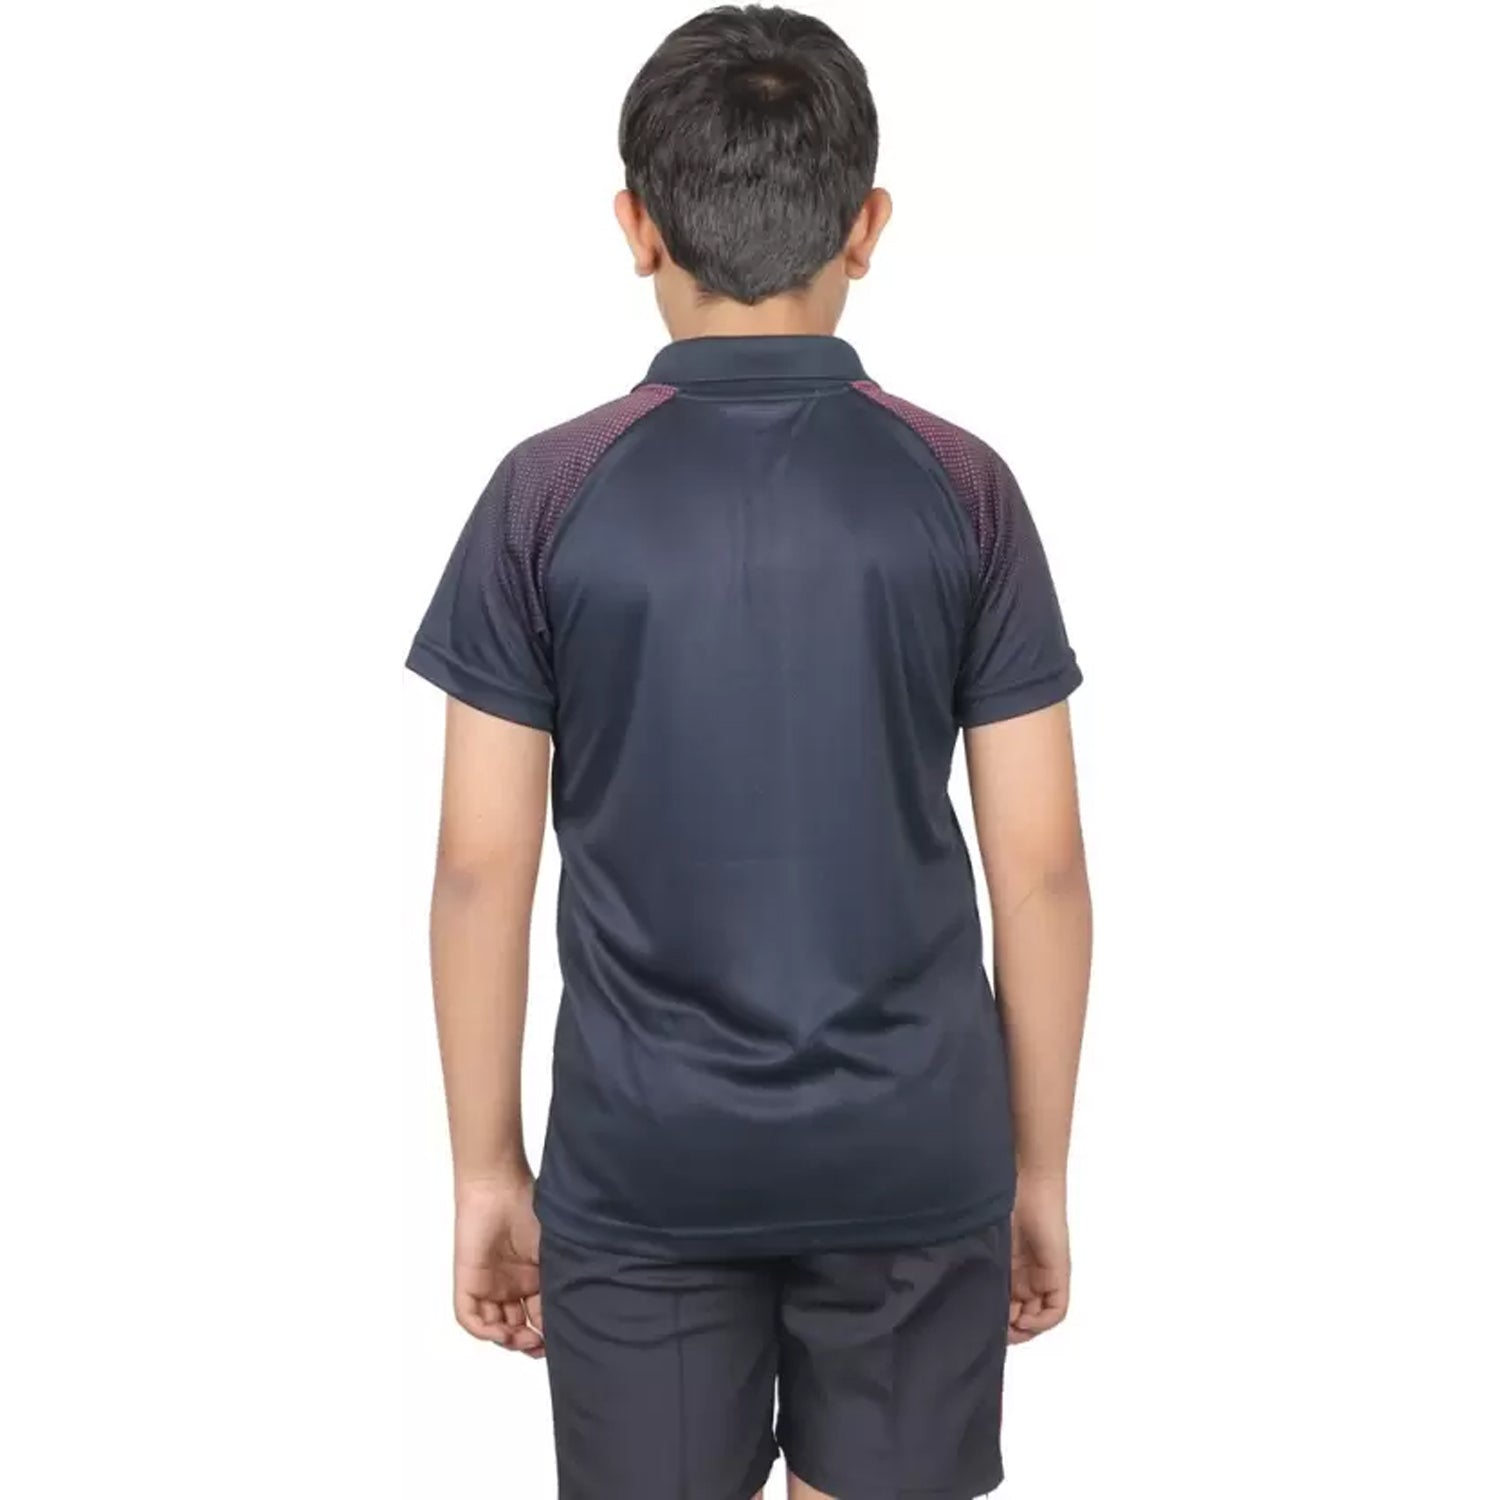 Vector-X Sparker Kids Polo T-Shirt - Best Price online Prokicksports.com